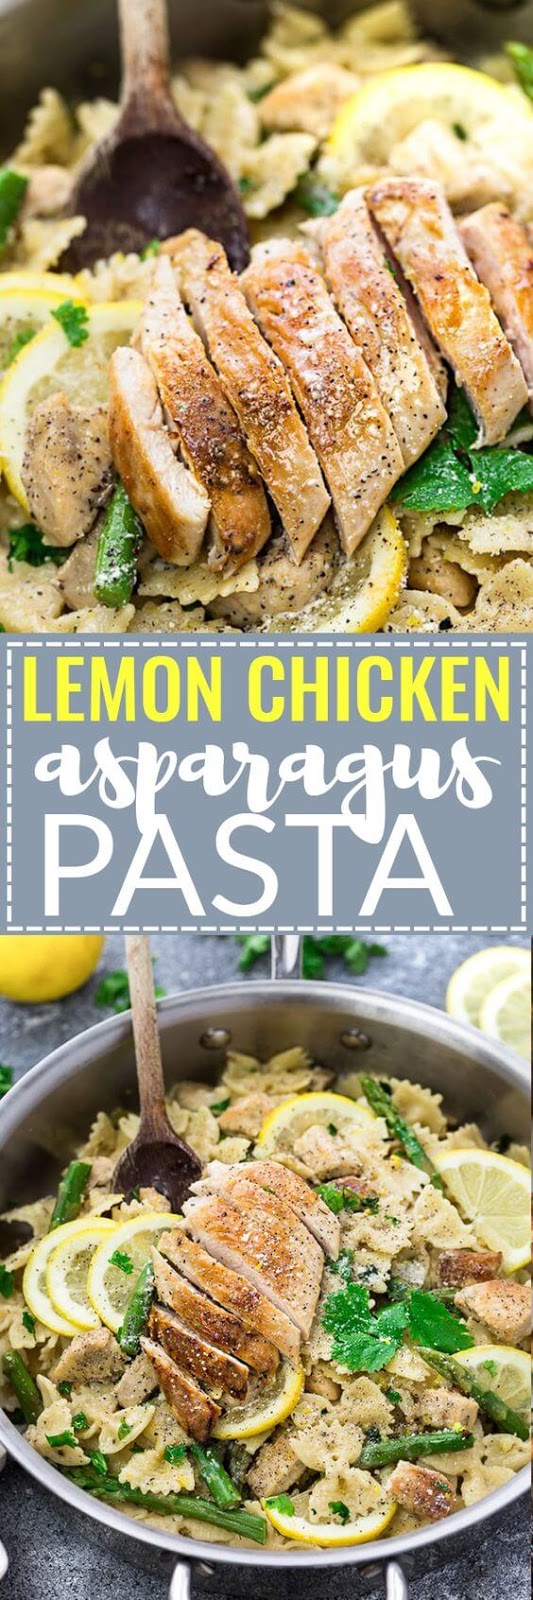 Lemon Chicken Asparagus Pasta